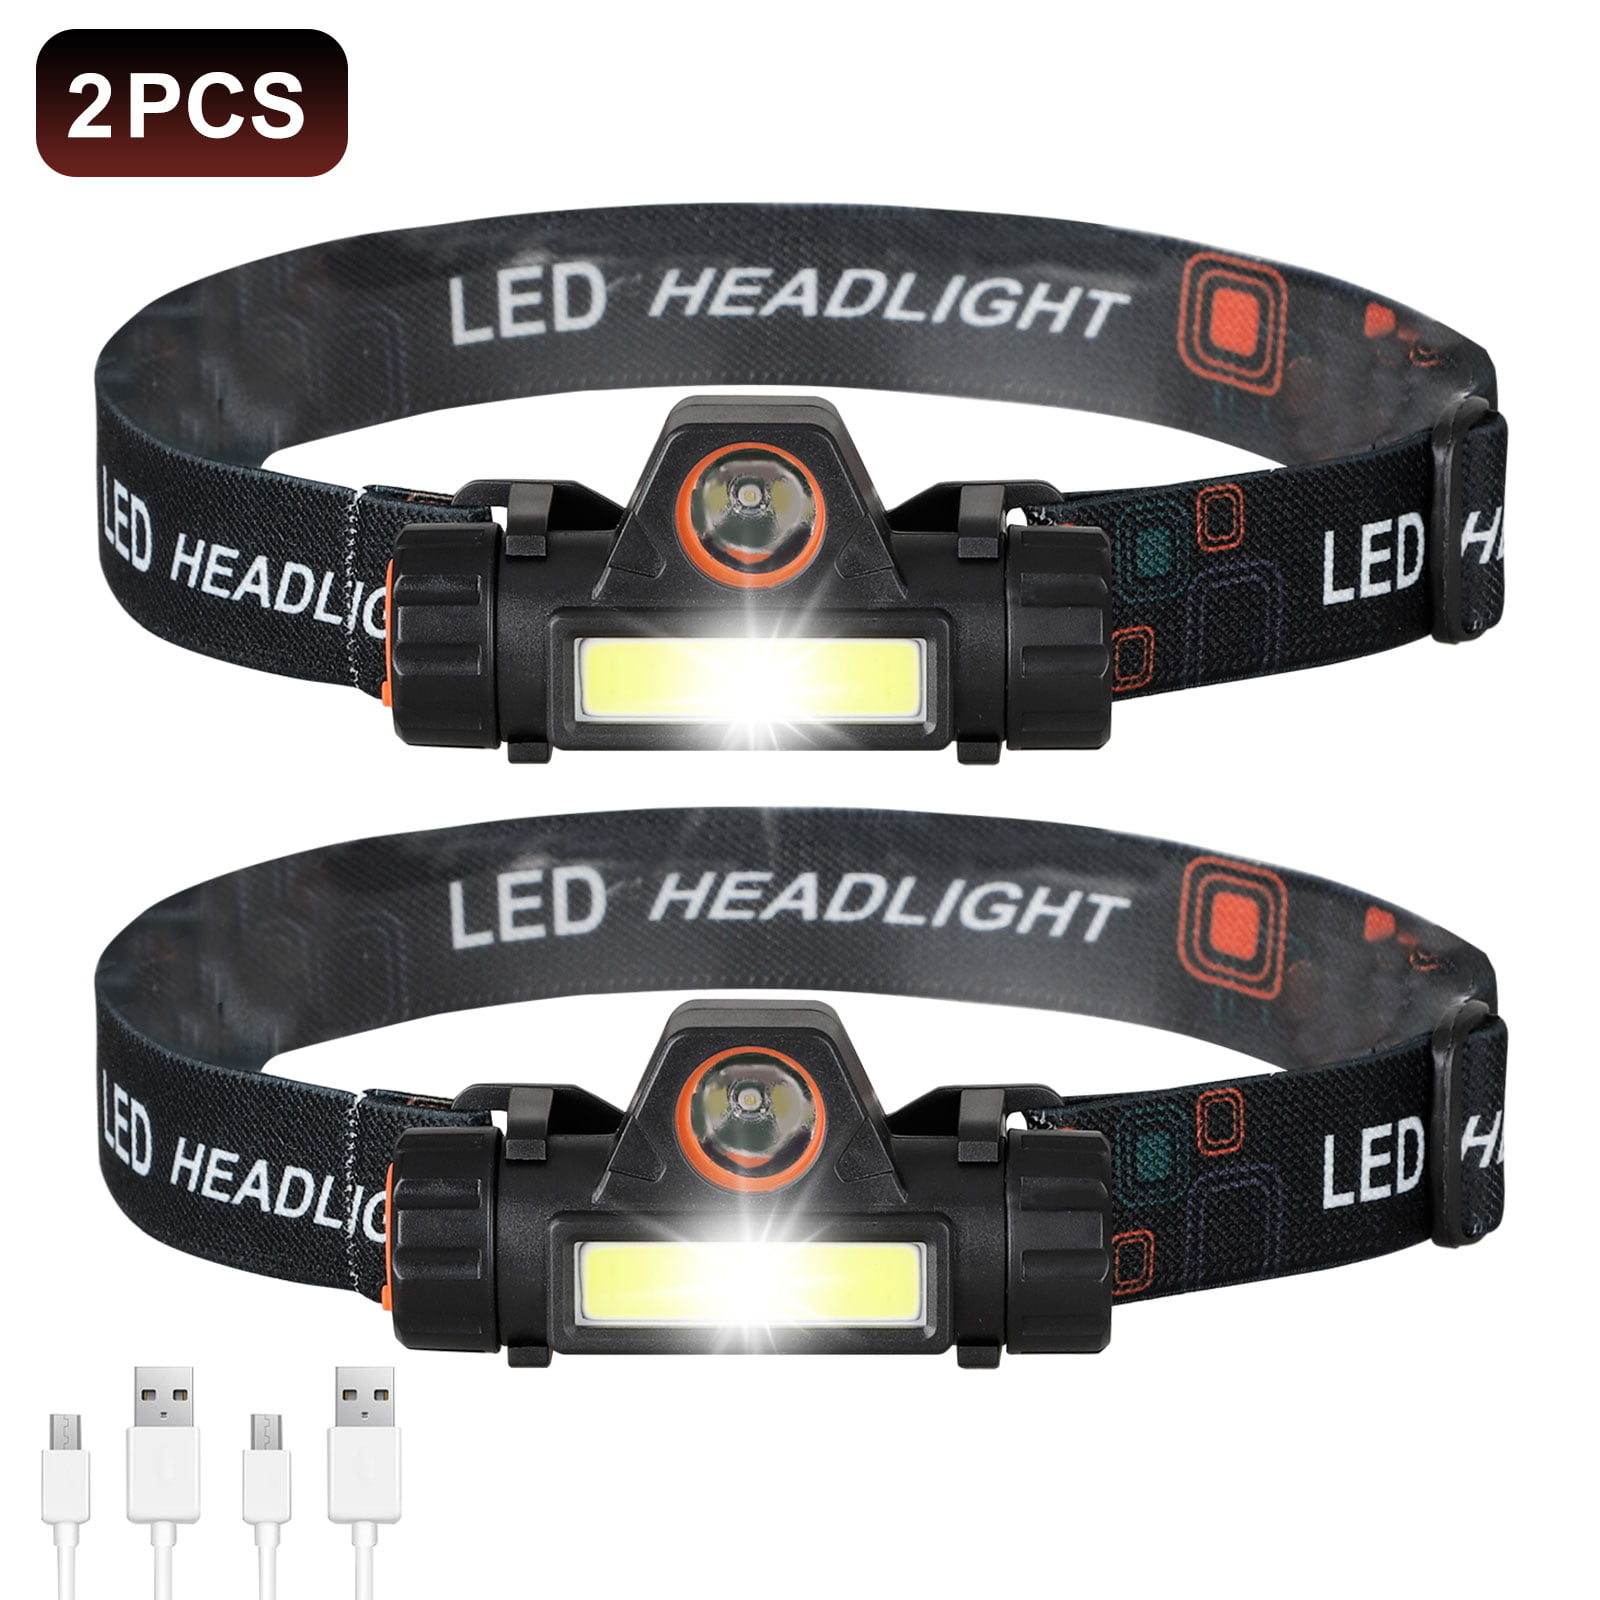 2 Pcs LED Headlamp USB Rechargeable Motion Sensor Cap Lamp Headlight Flashlight